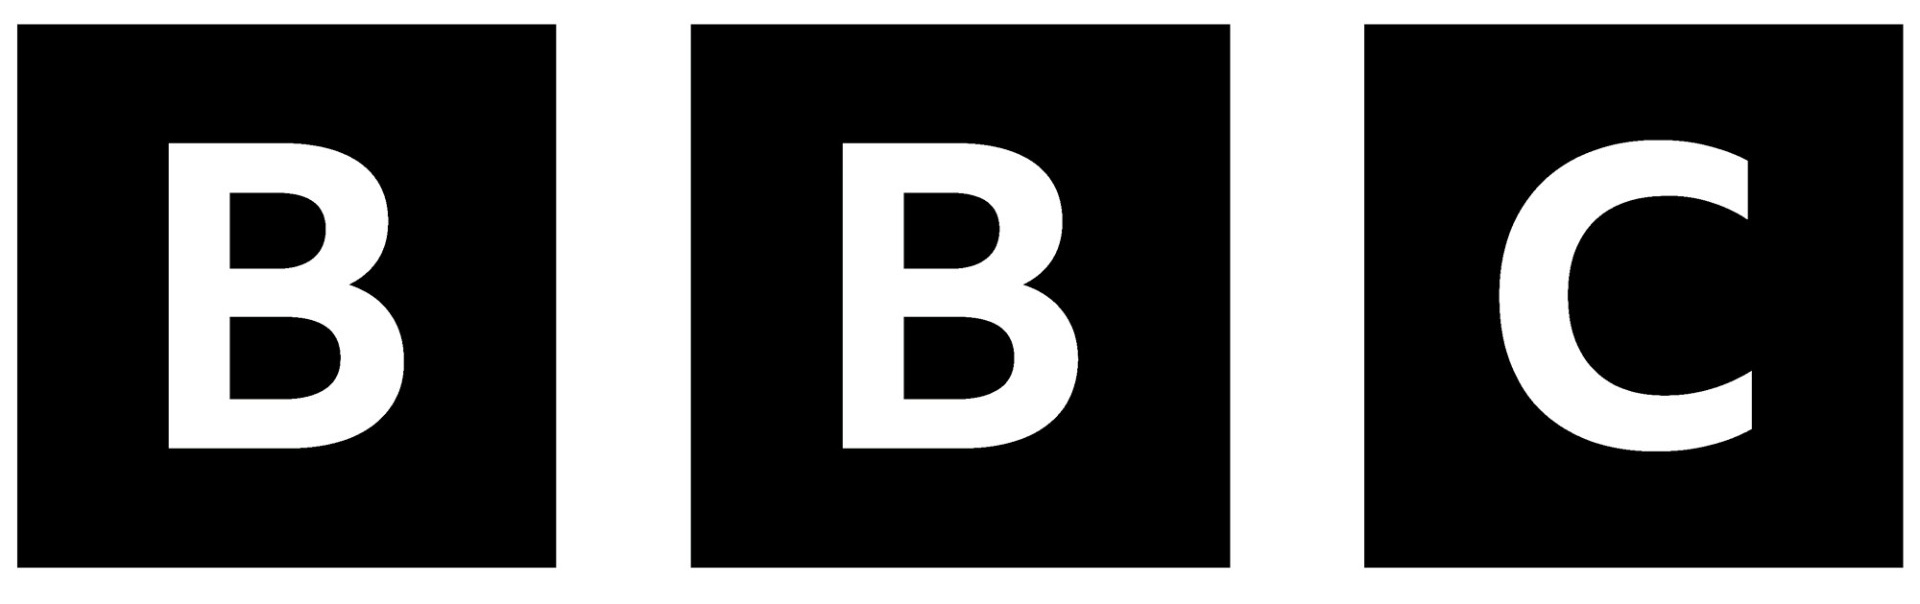 BBC logo. 